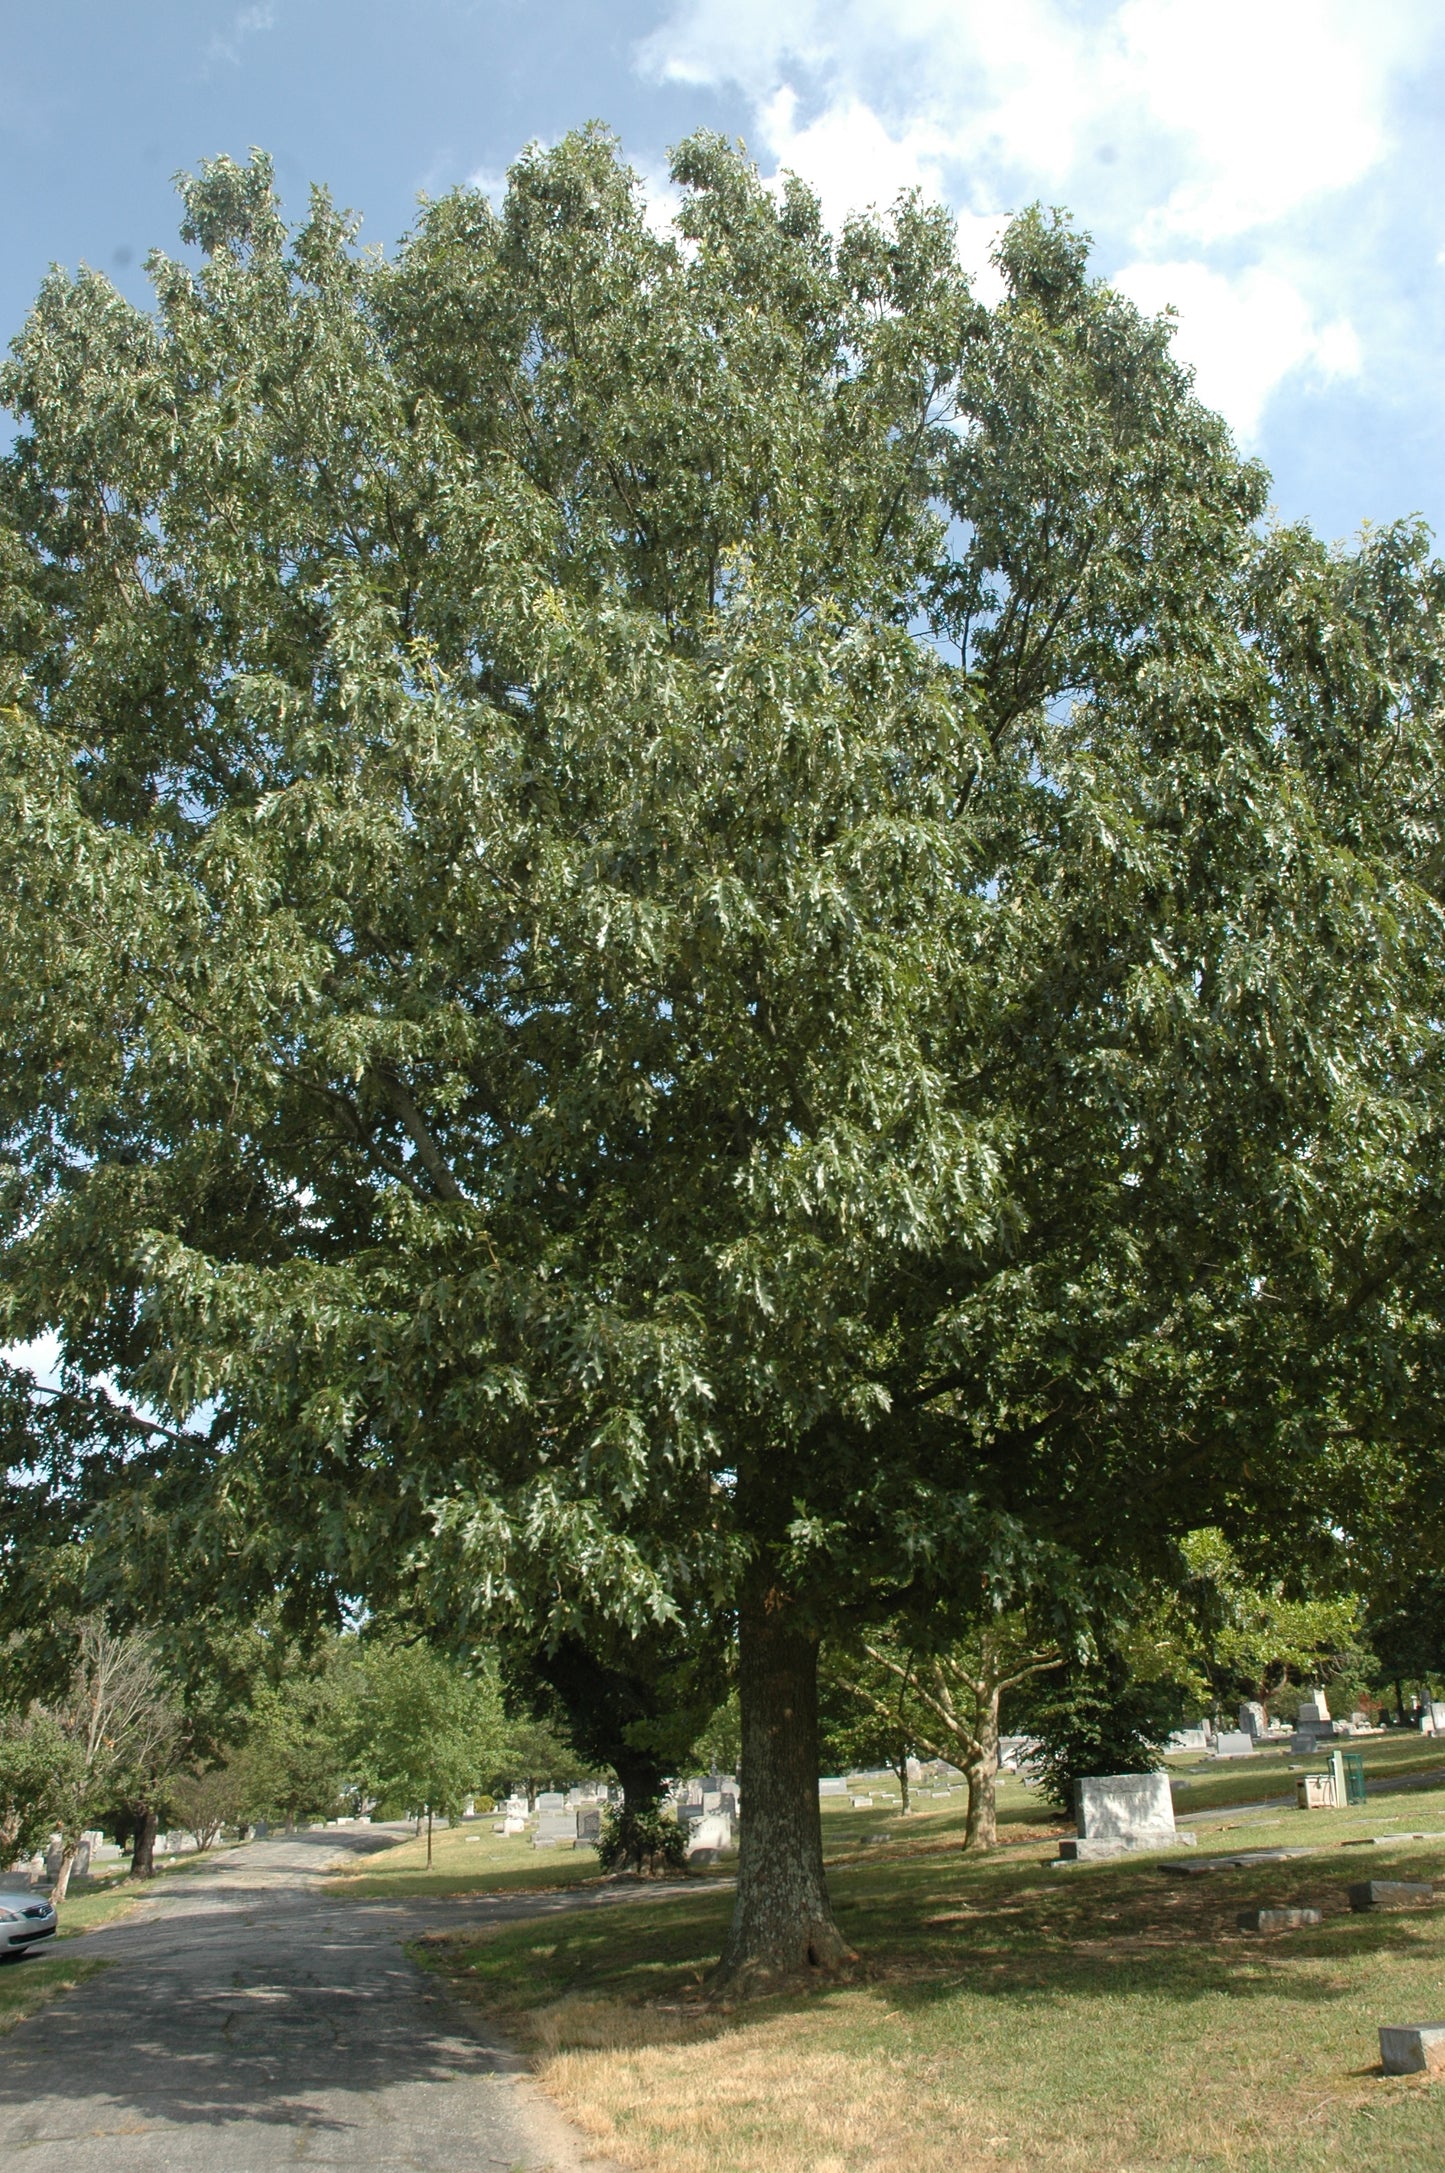 Cherrybark Oak (Quercus pagoda)